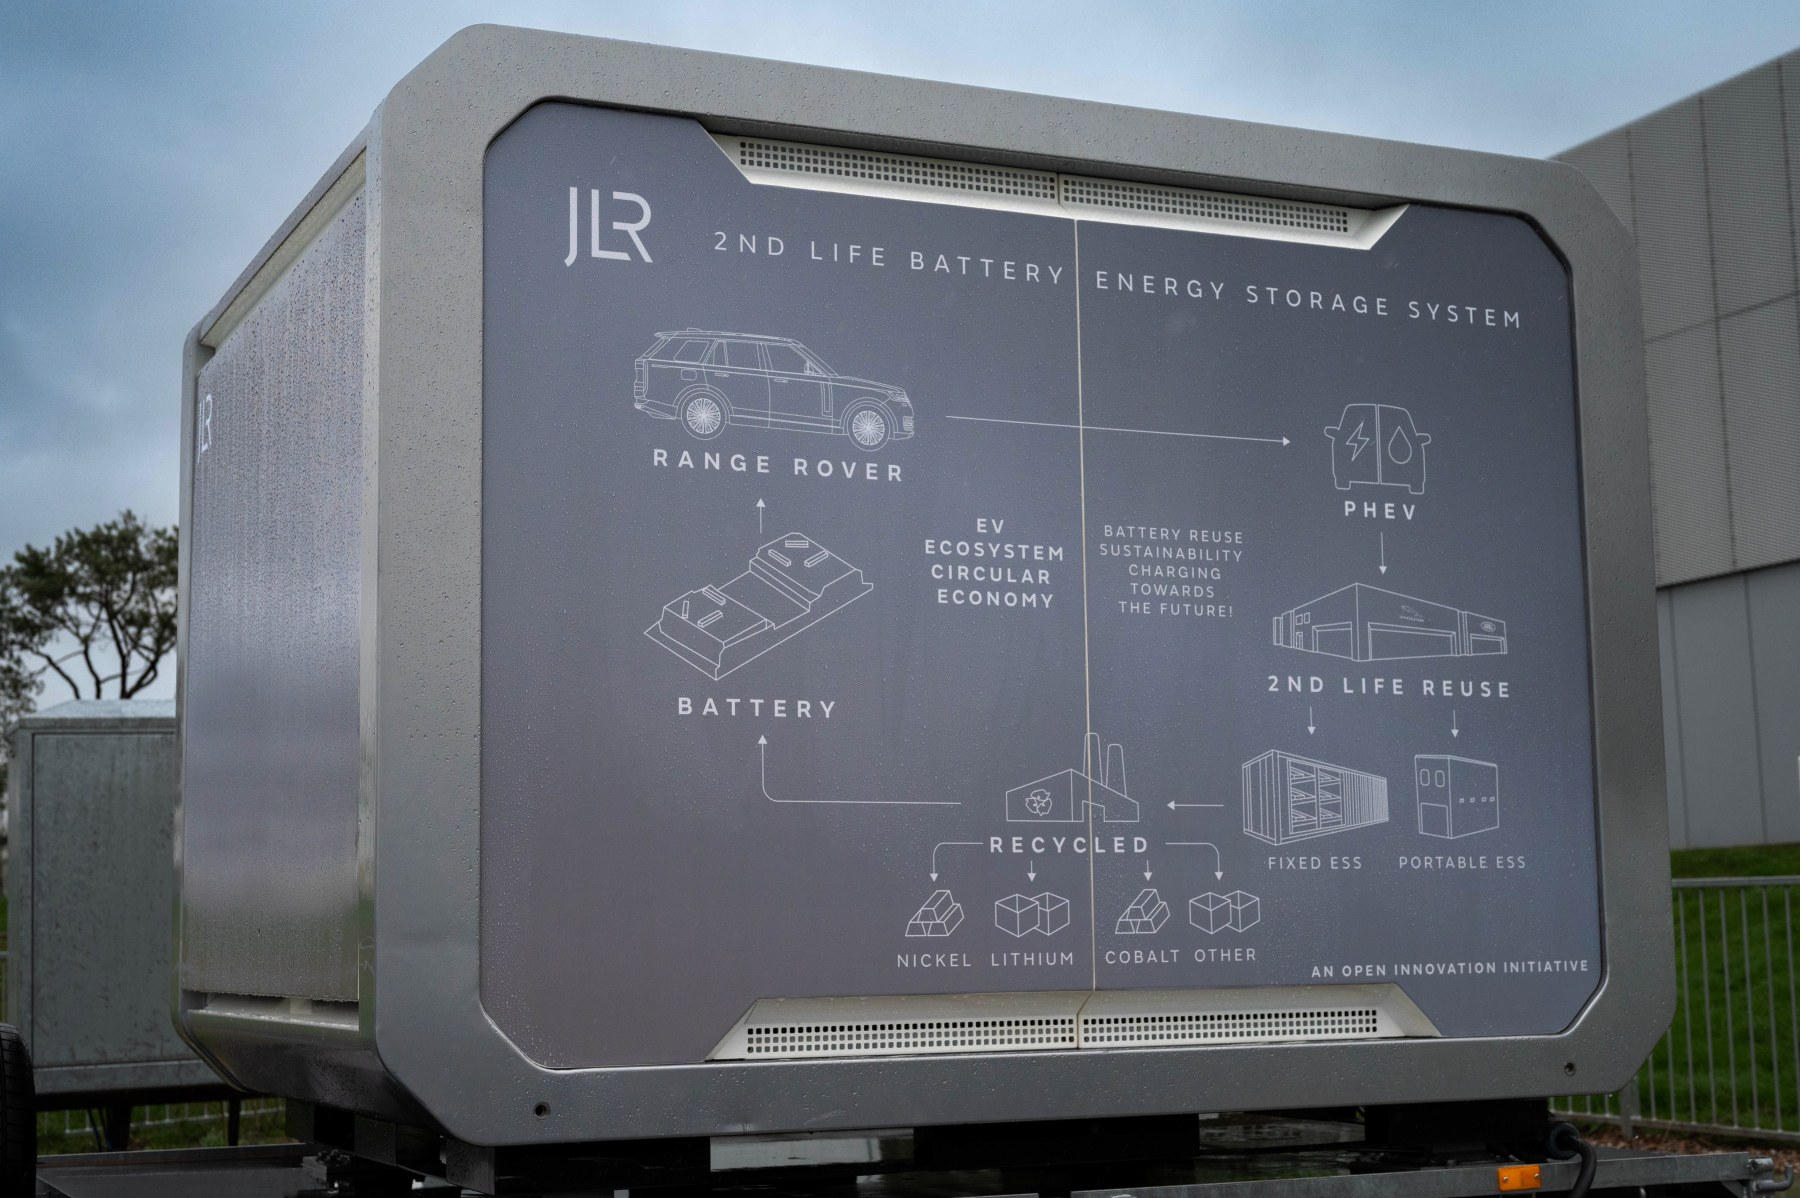 JLR BESS Portable Energy Storage-1